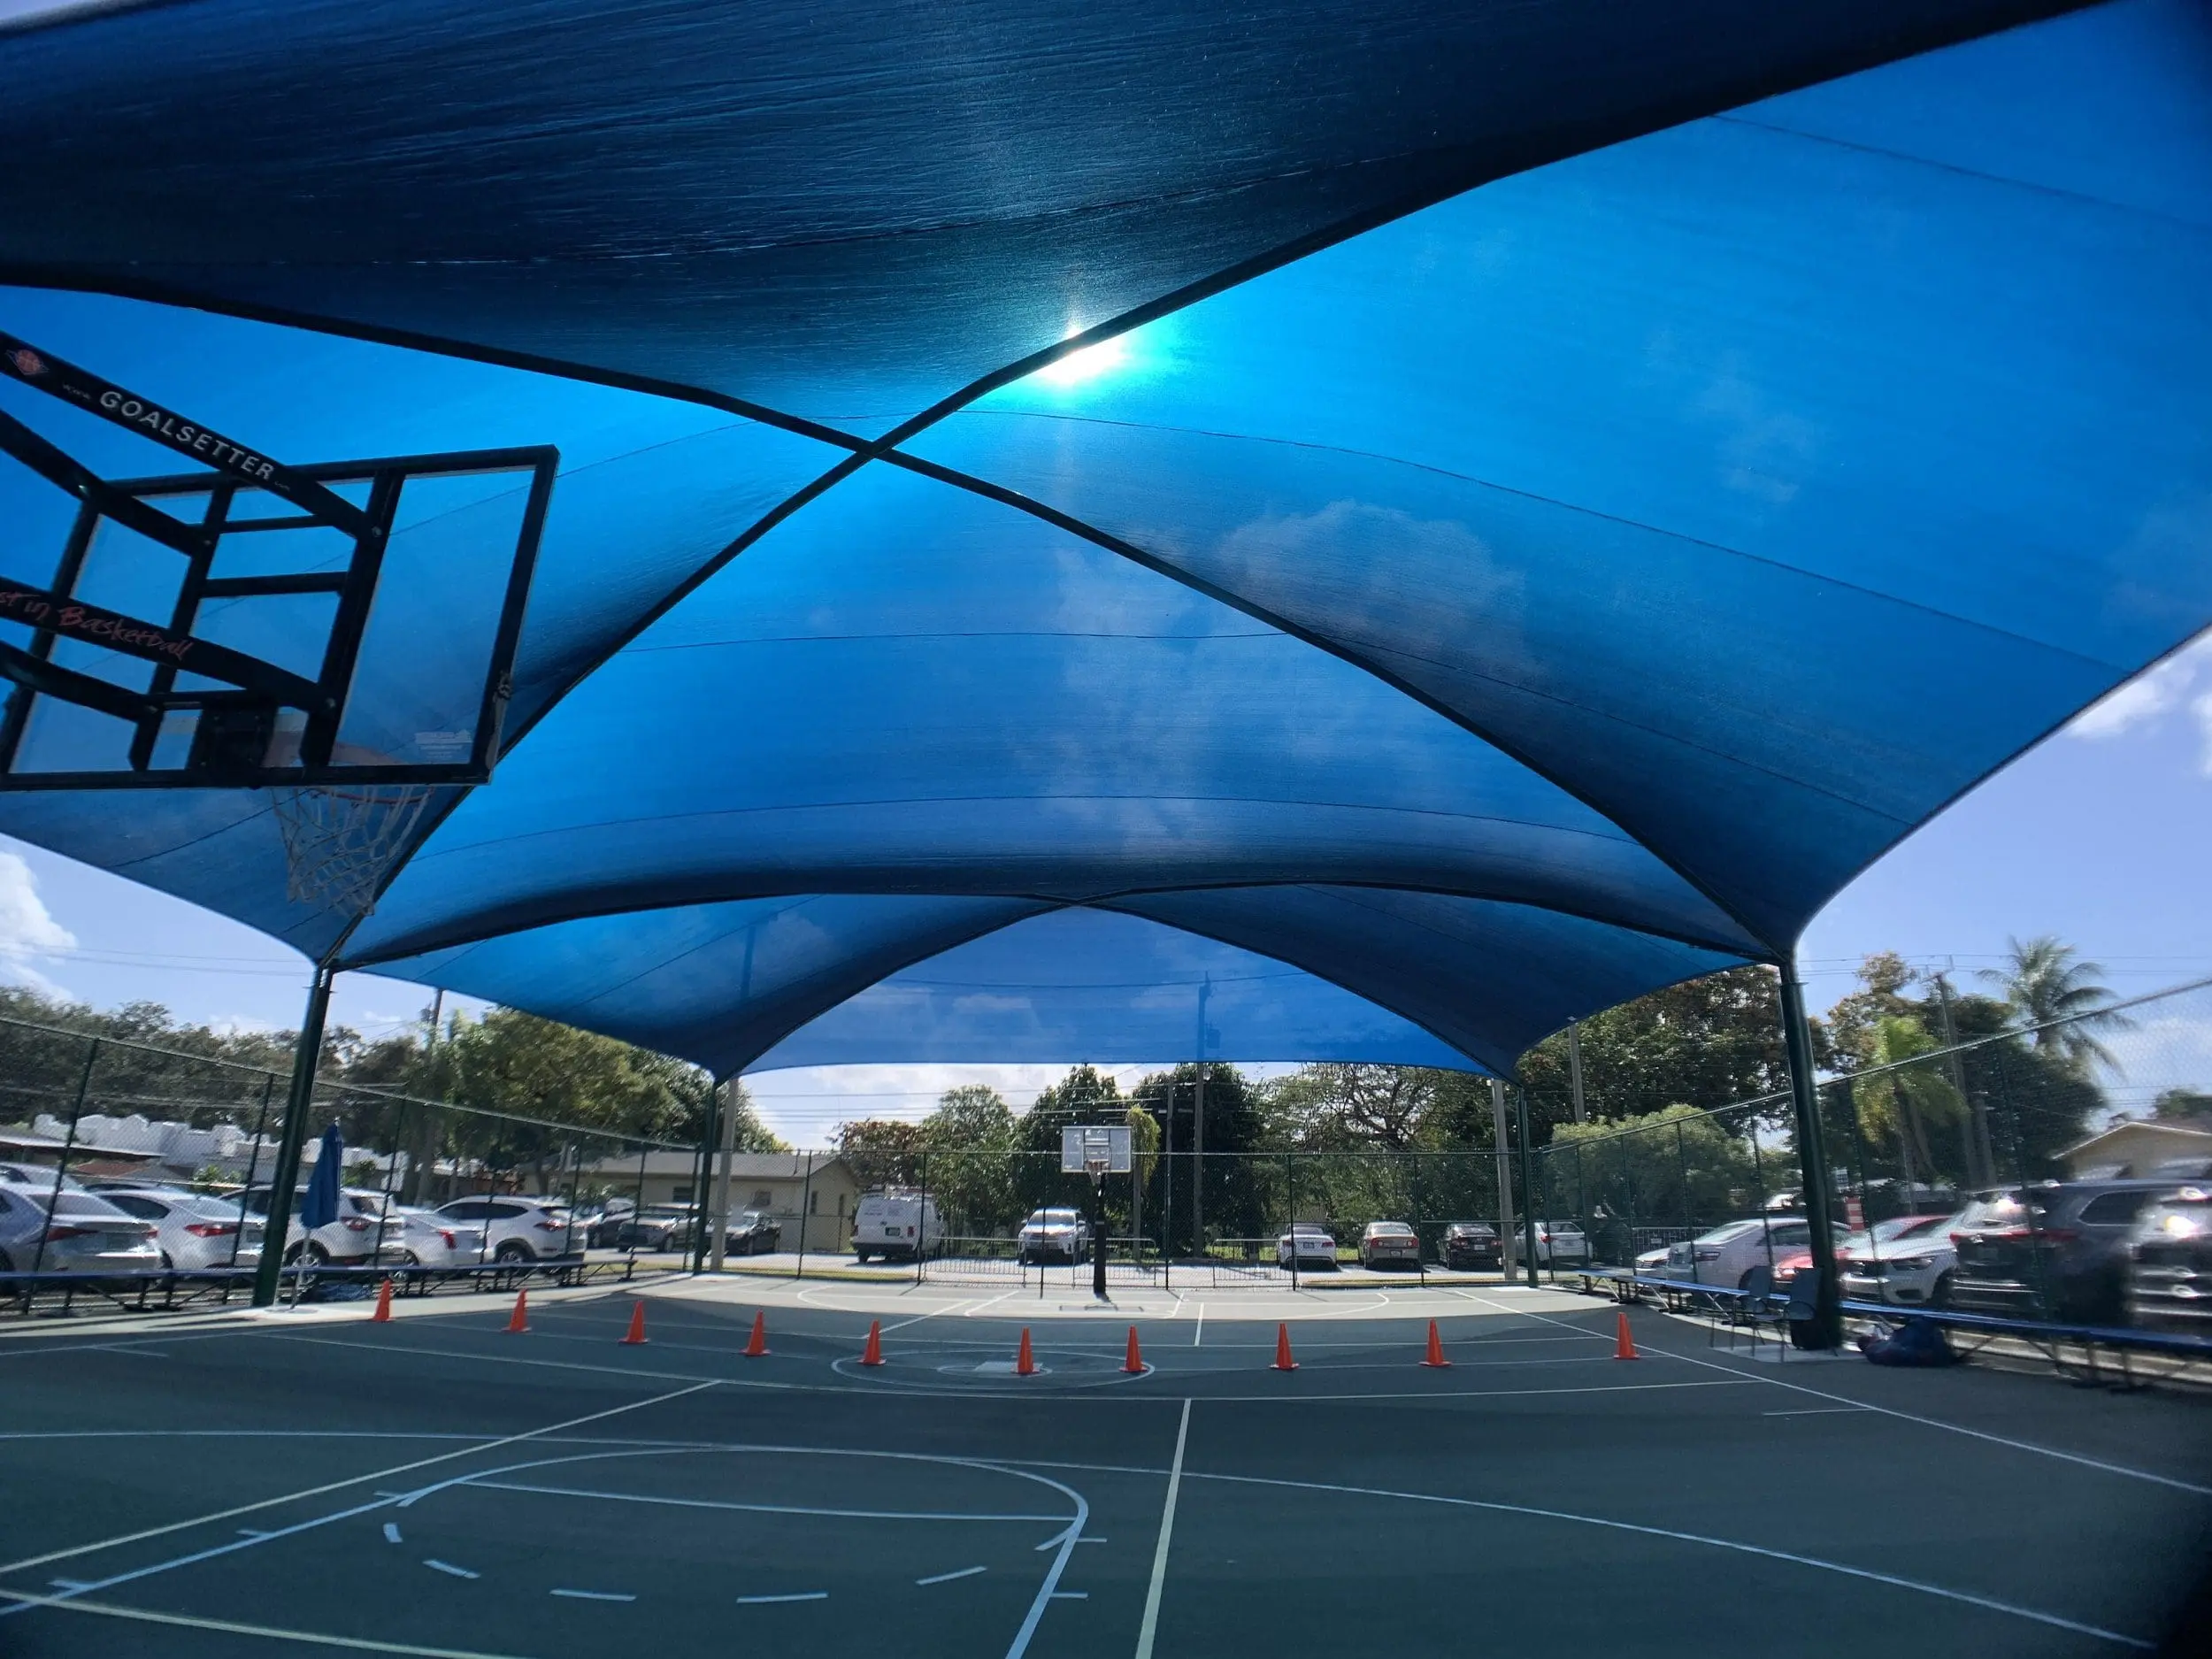 Giant Shade Header over a basketball court